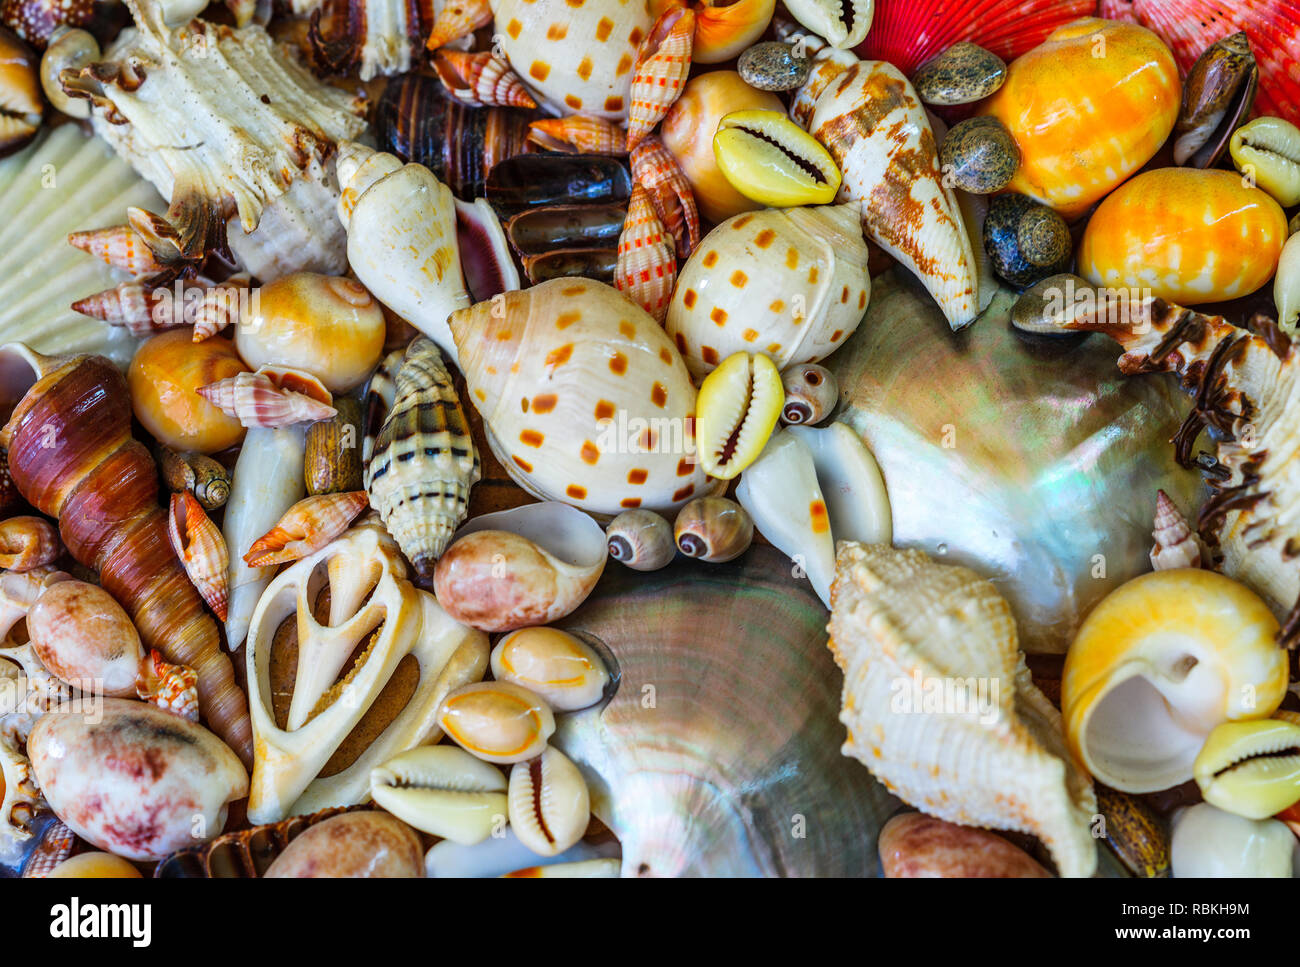 Dead Dry Sea Animals and Seashells on Wall Photo Stock Photo - Alamy